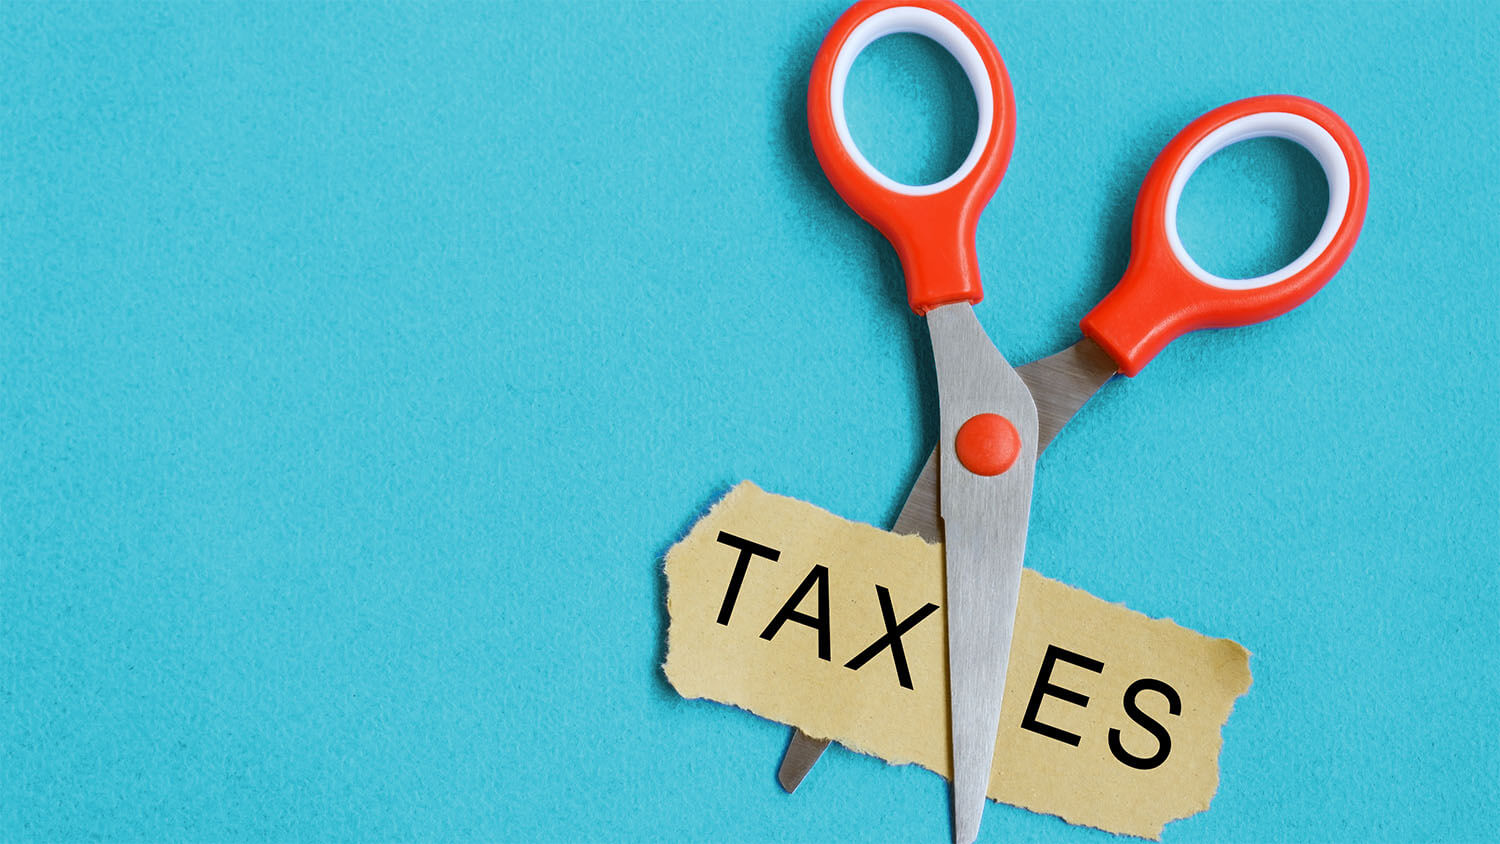 Plan ahead to cut taxes like the capital gains tax